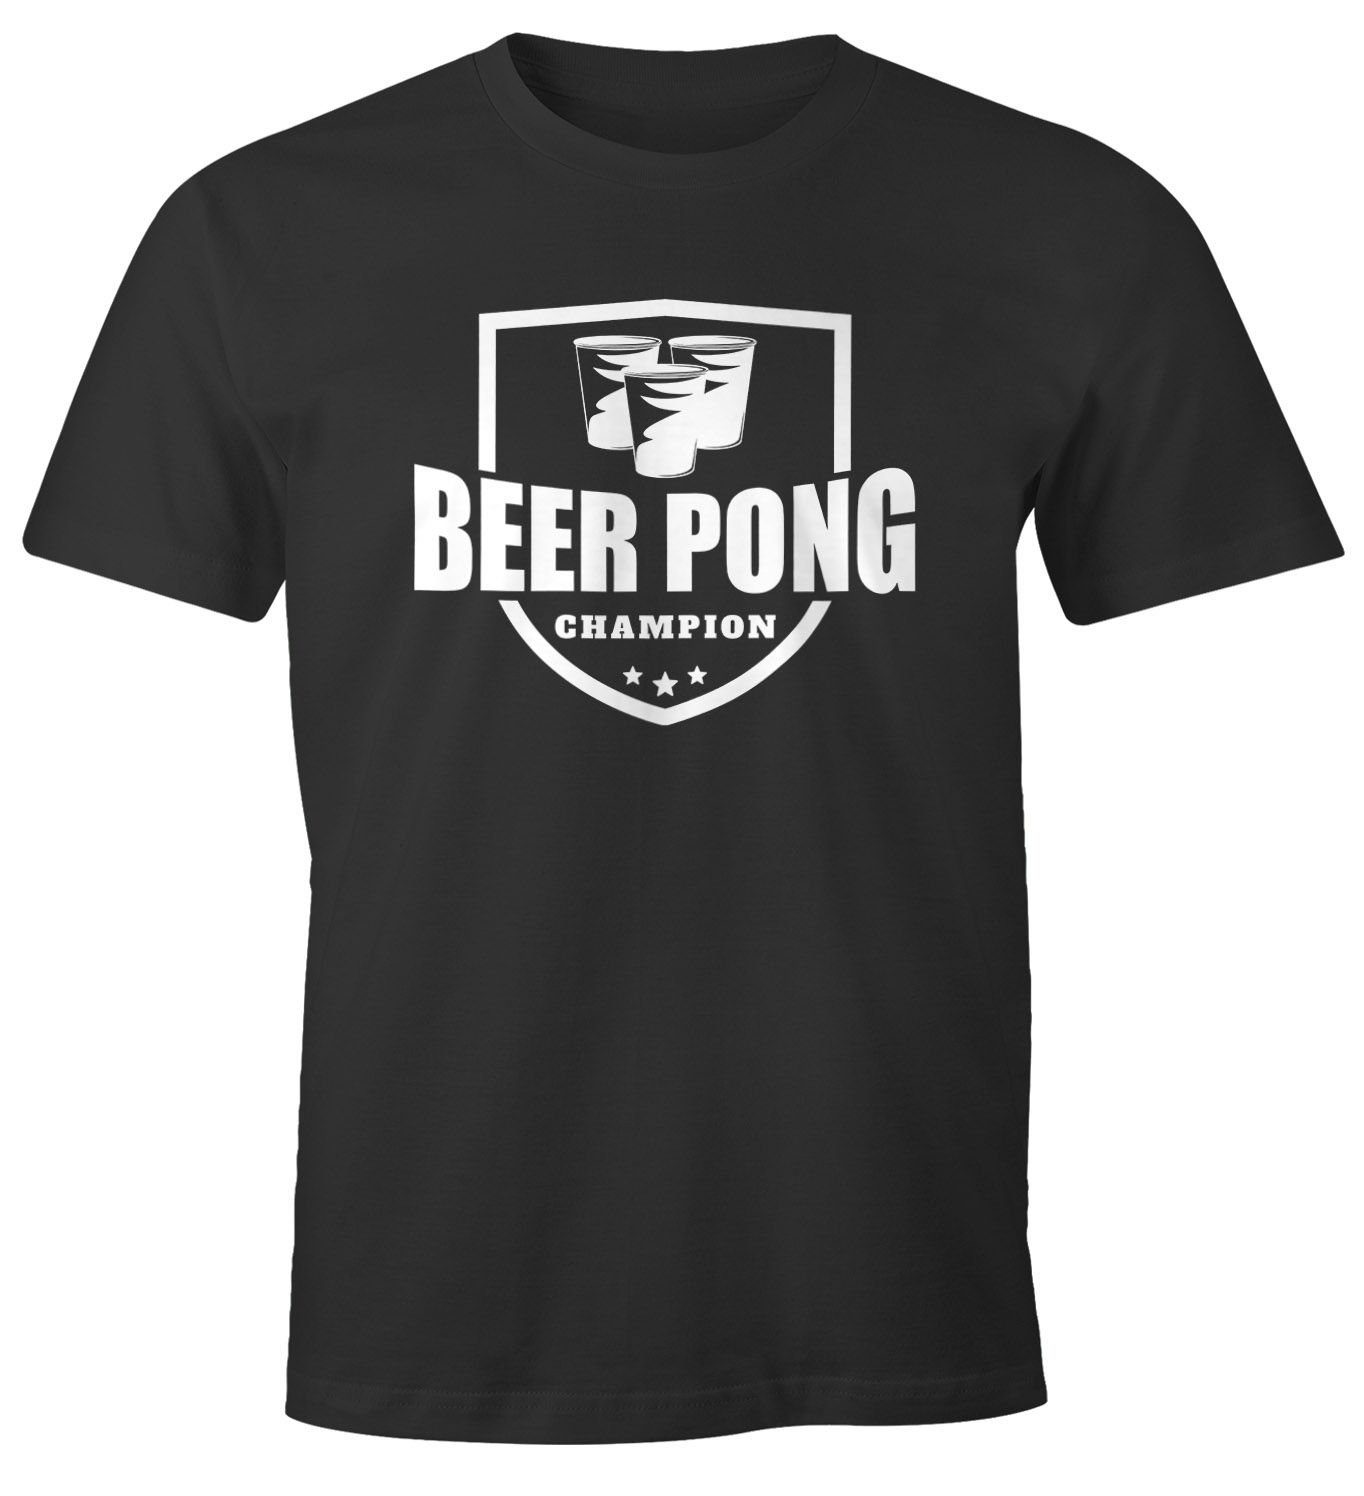 MoonWorks Print-Shirt Herren T-Shirt Beer Pong Champion lustiges Trink Shirt Saufen Bier Party Moonworks® mit Print